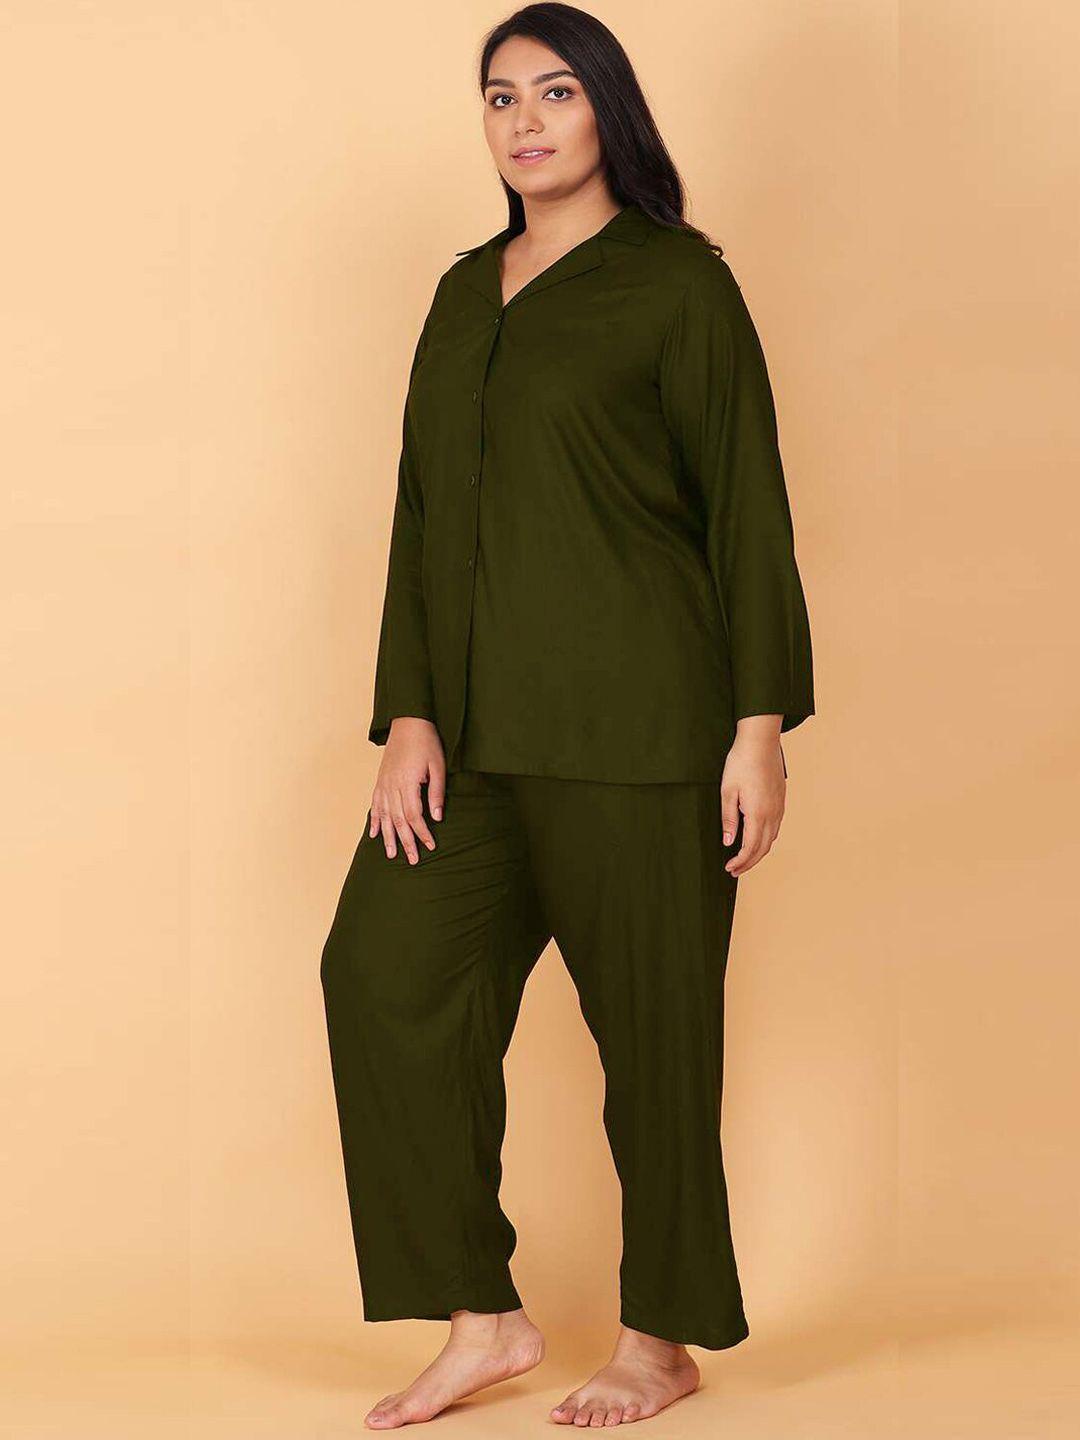 lastinch-women-green-night-suit